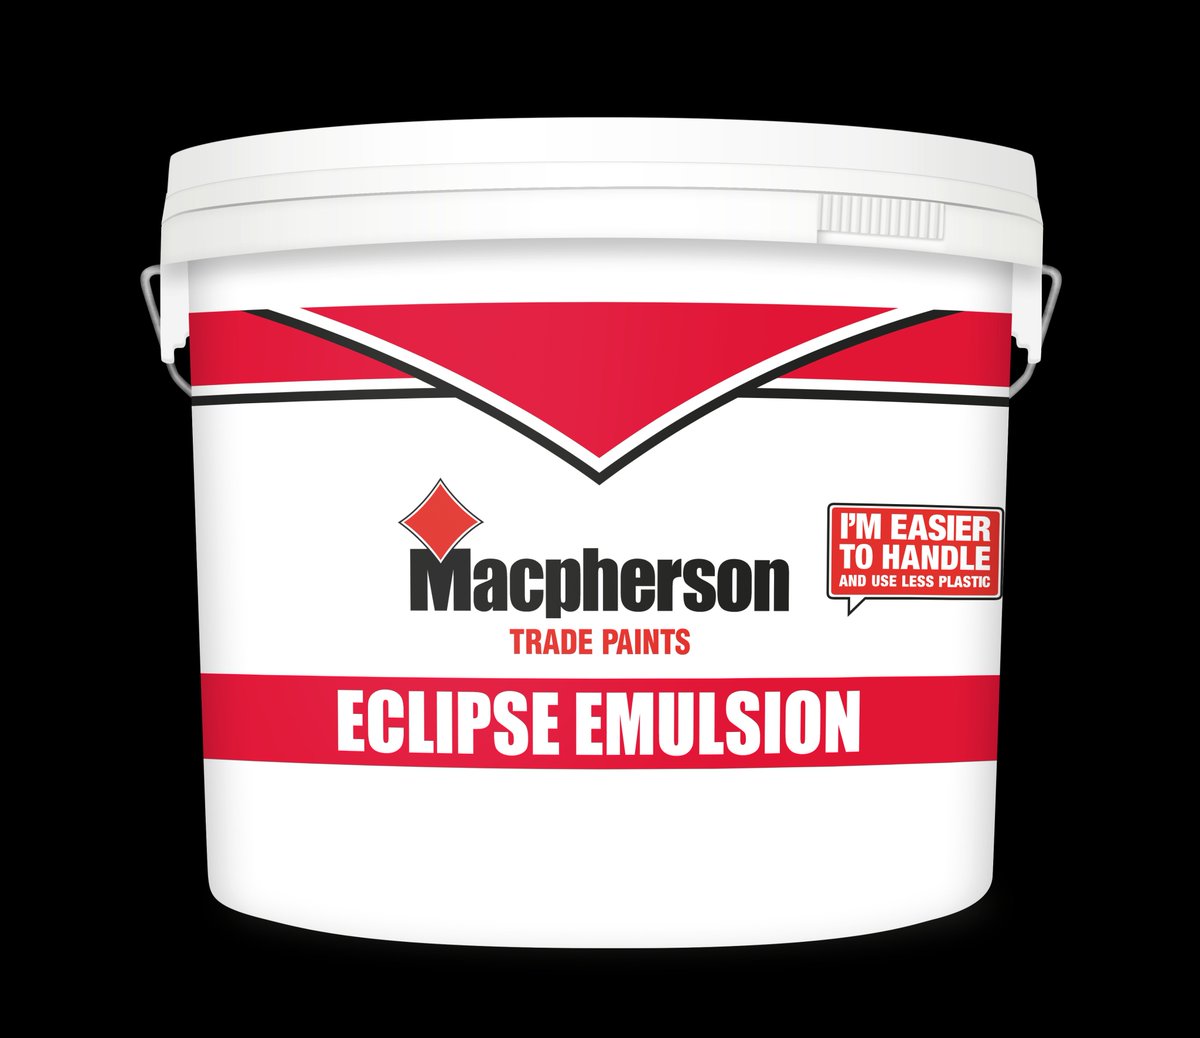 #WednesdayWisdom #FebDeals 👀😇
@CrownTradePaint #Macpherson #Eclipse 
Brilliant White Matt 15L 
Buy 2 Or More For £21.99! each inc vat